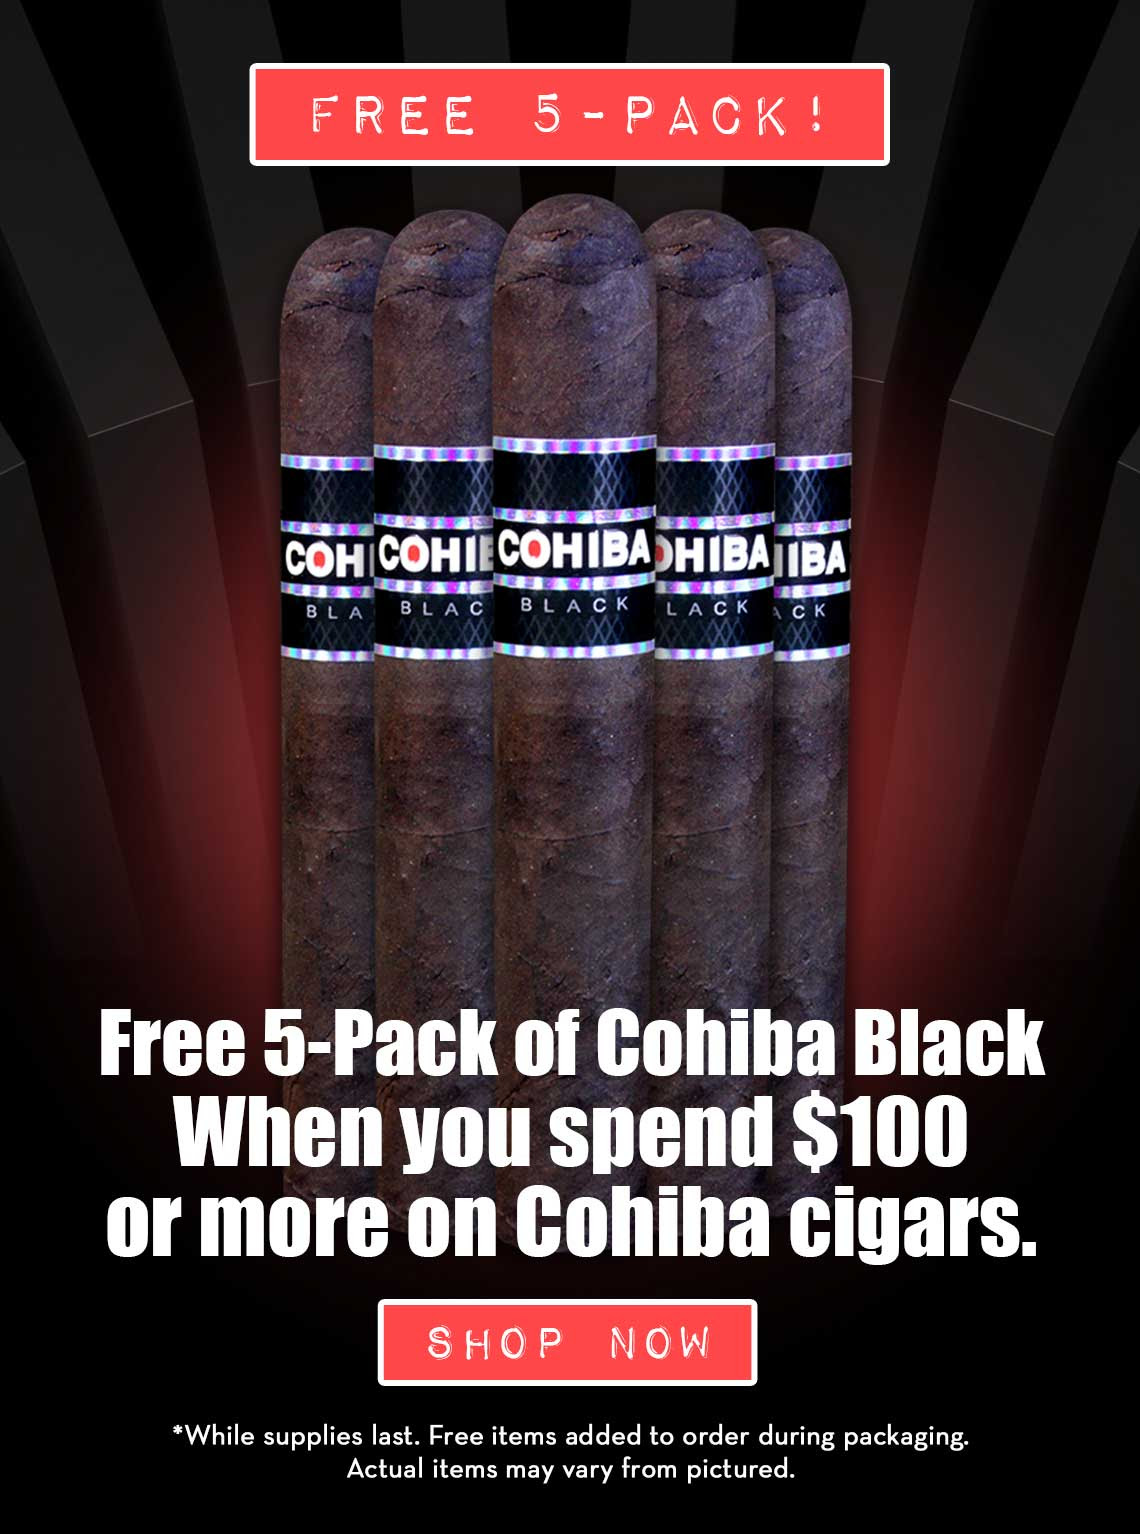 Free Cohiba Black 5 Pack Offer